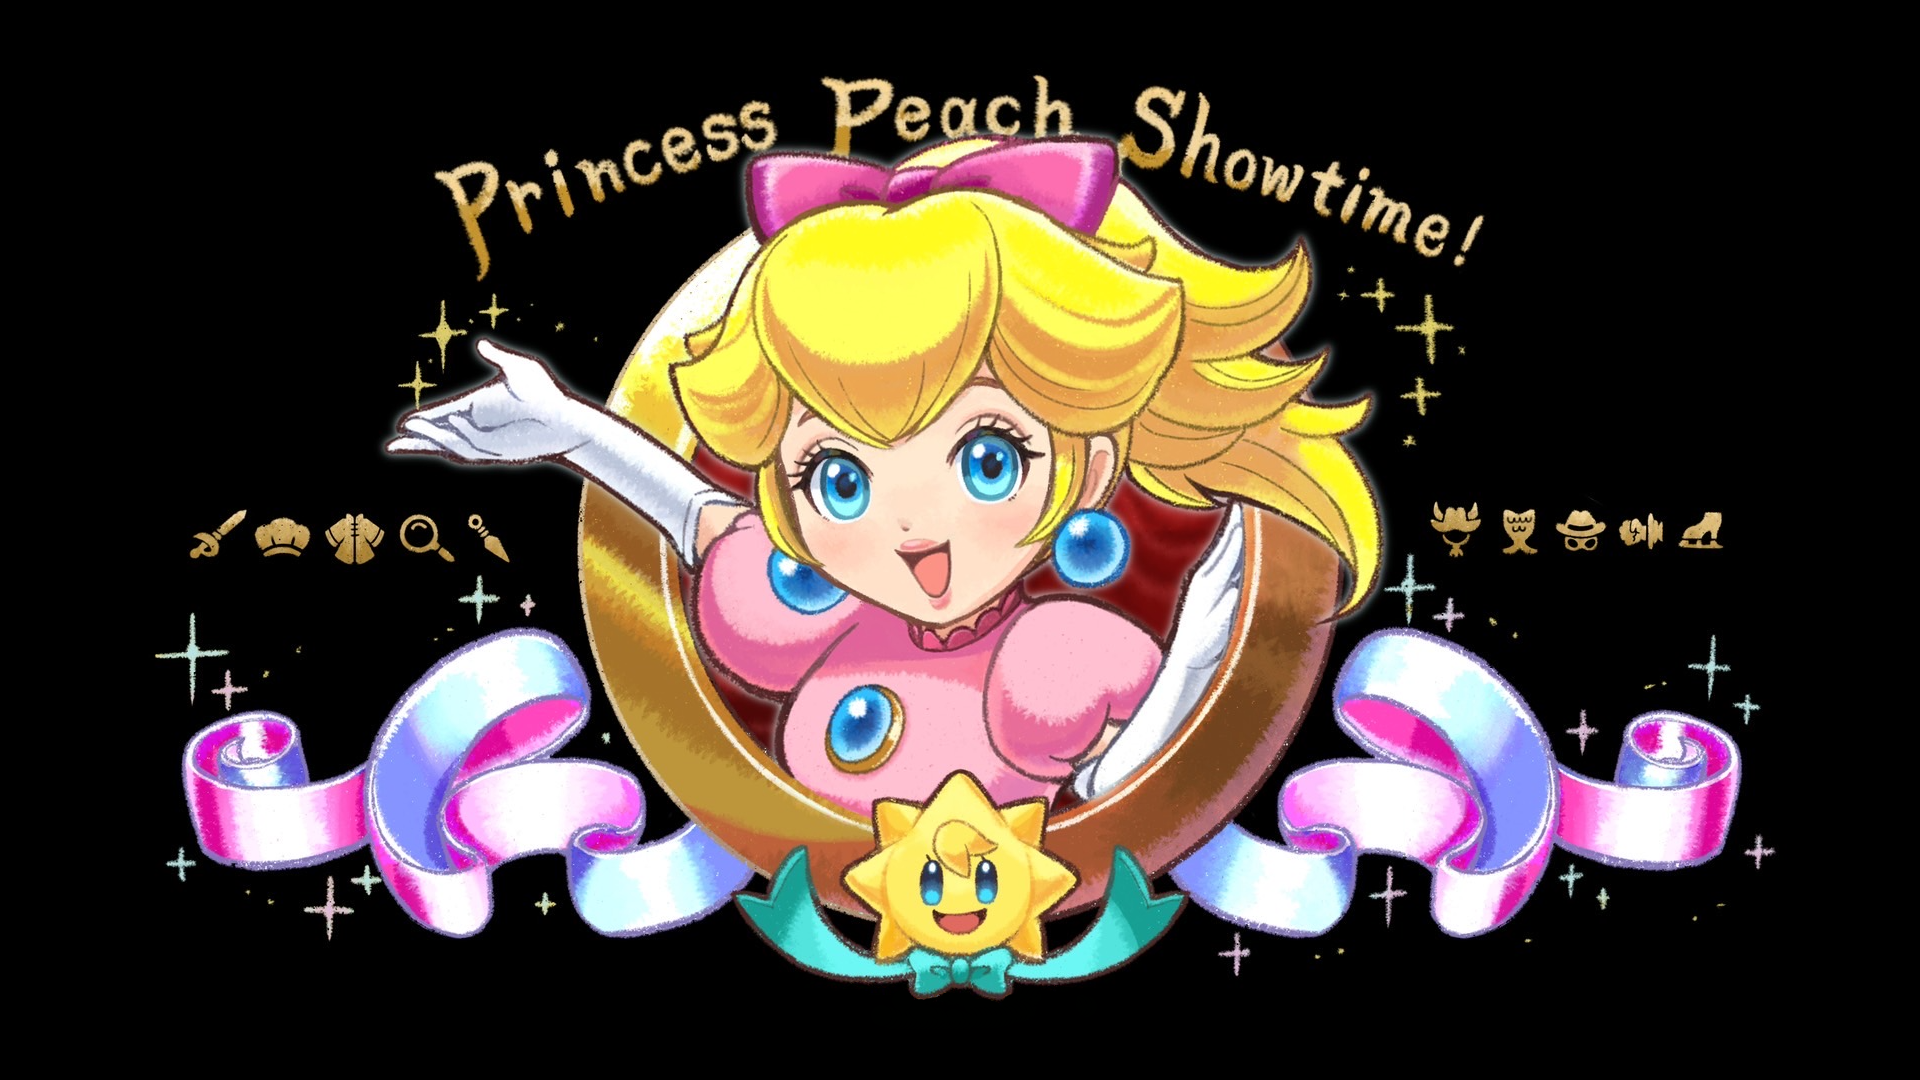 Princess Peach Nintendo Princess Peach Showtime Dress Pink Dress Video Games Video Game Girls Text R 1920x1080